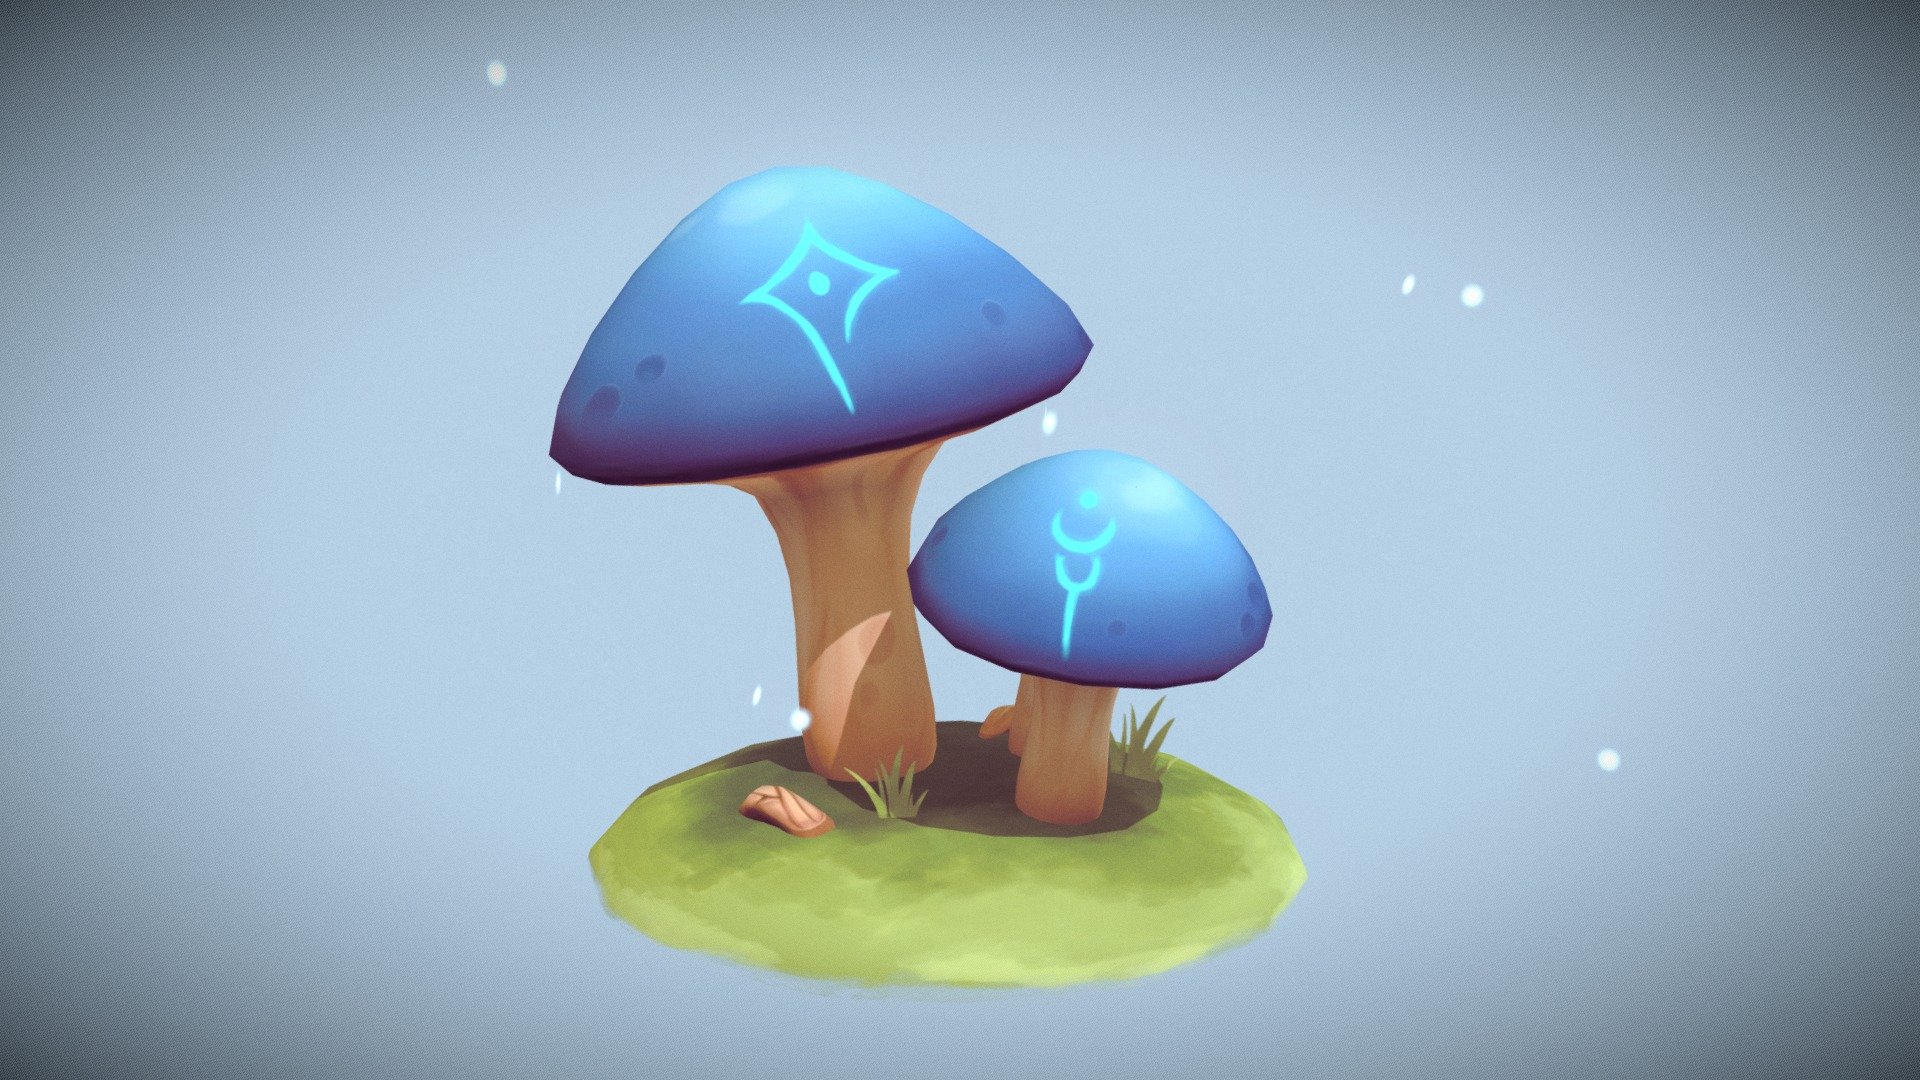 Mushrooms - 3D model by rabblueart 3d model